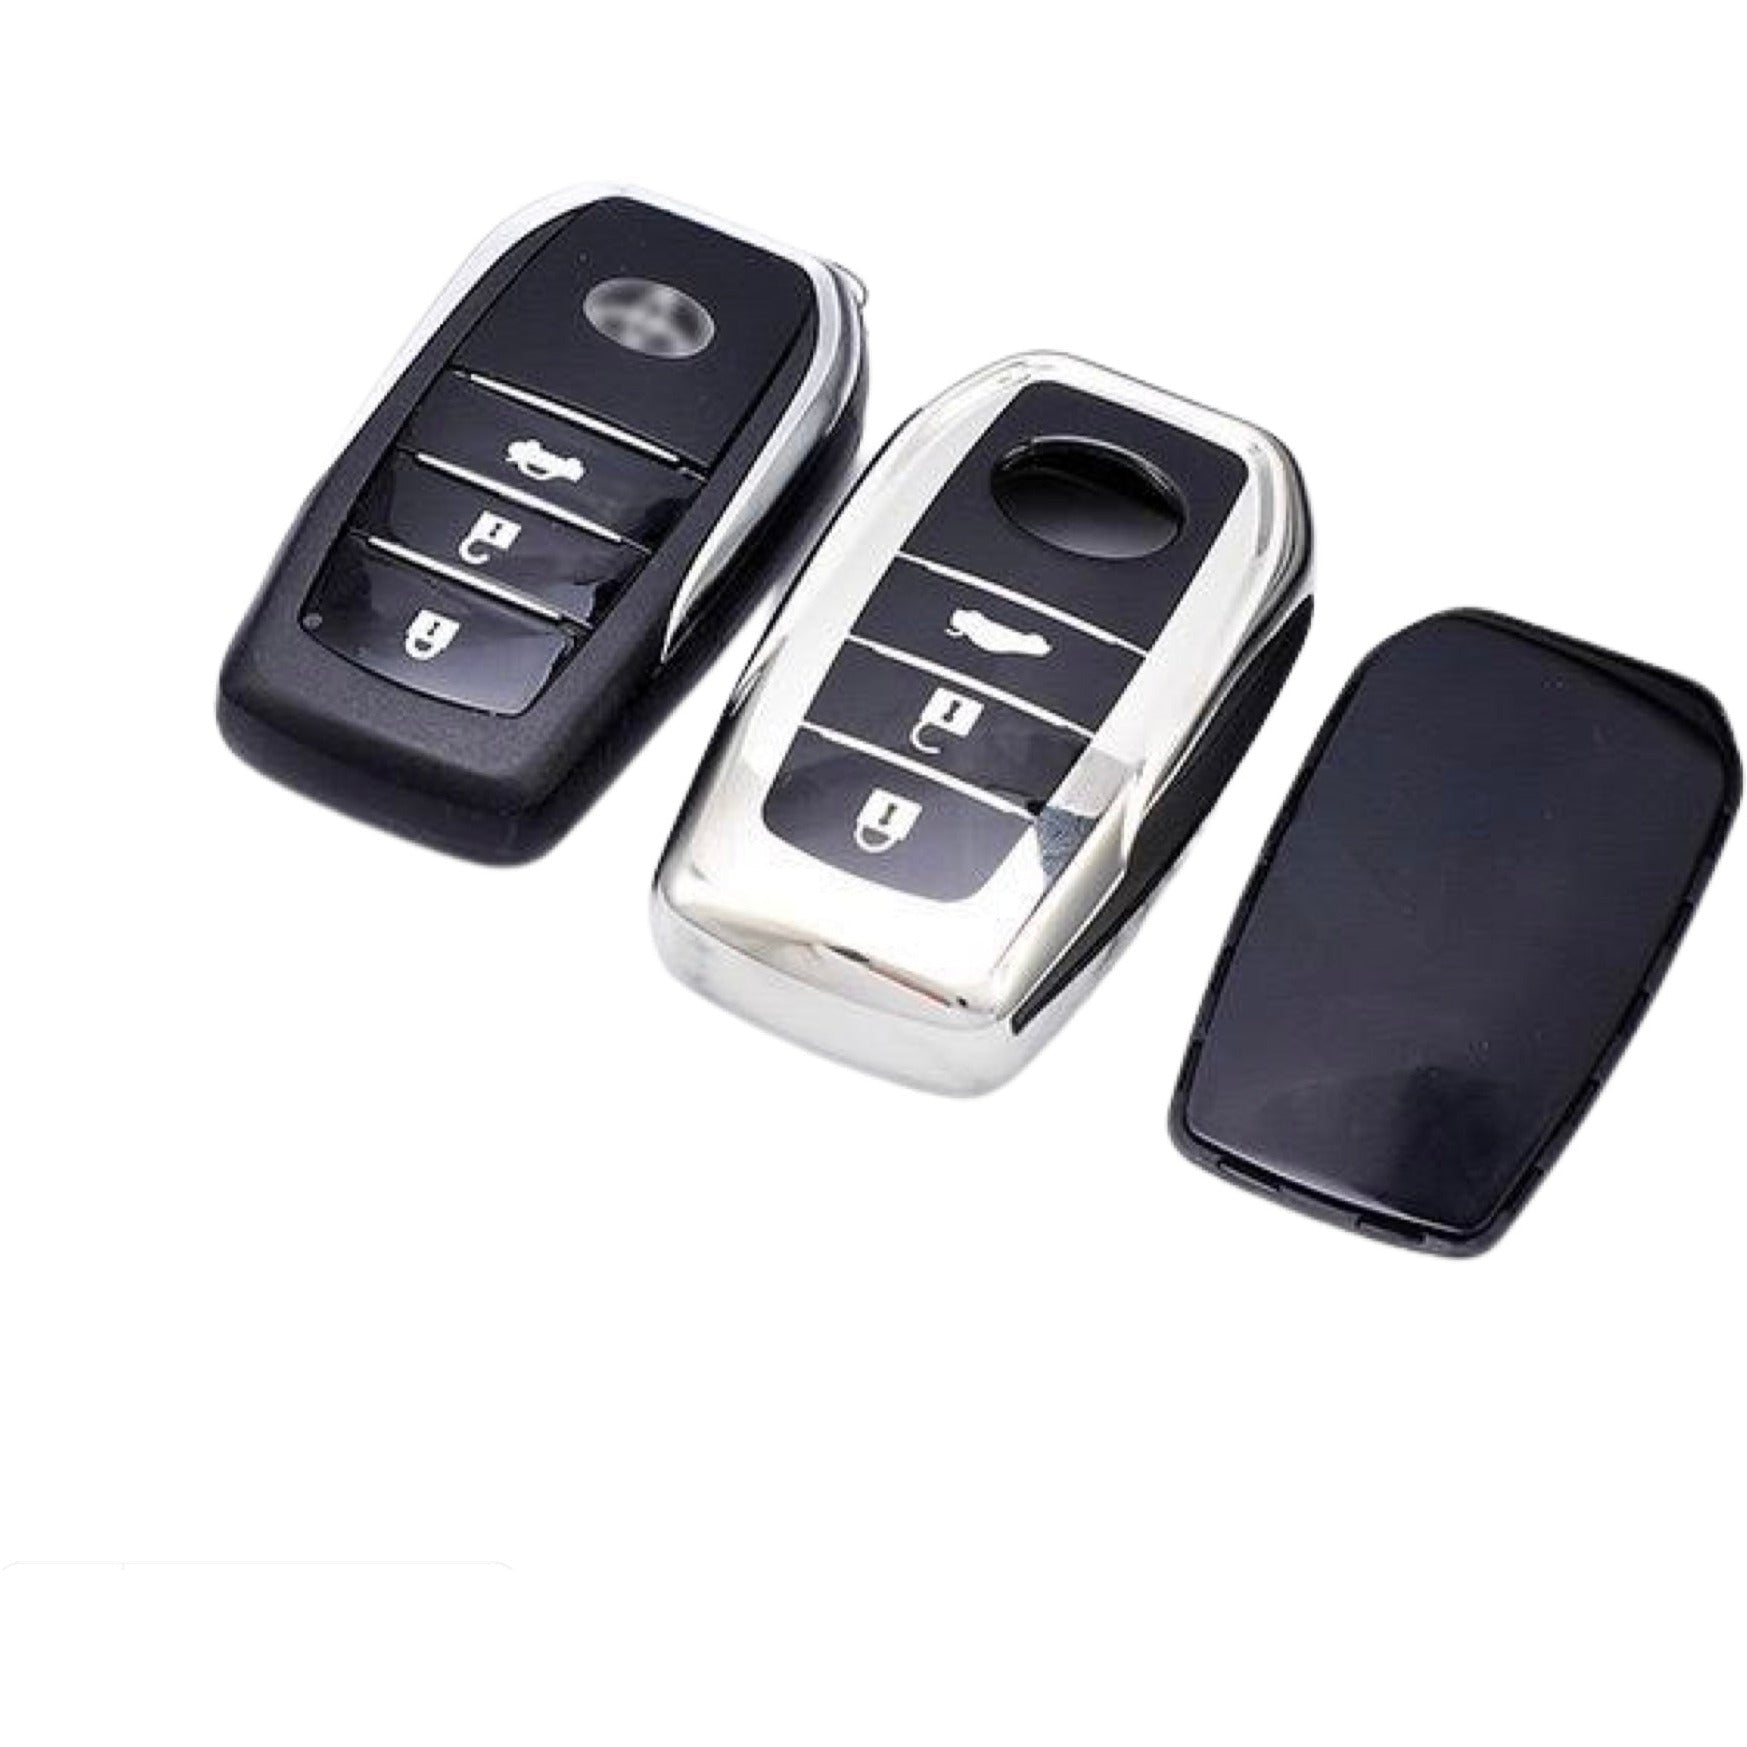 Toyota key cover | Hilux, Prado, Land Cruiser key fob cover | Toyota Accessories